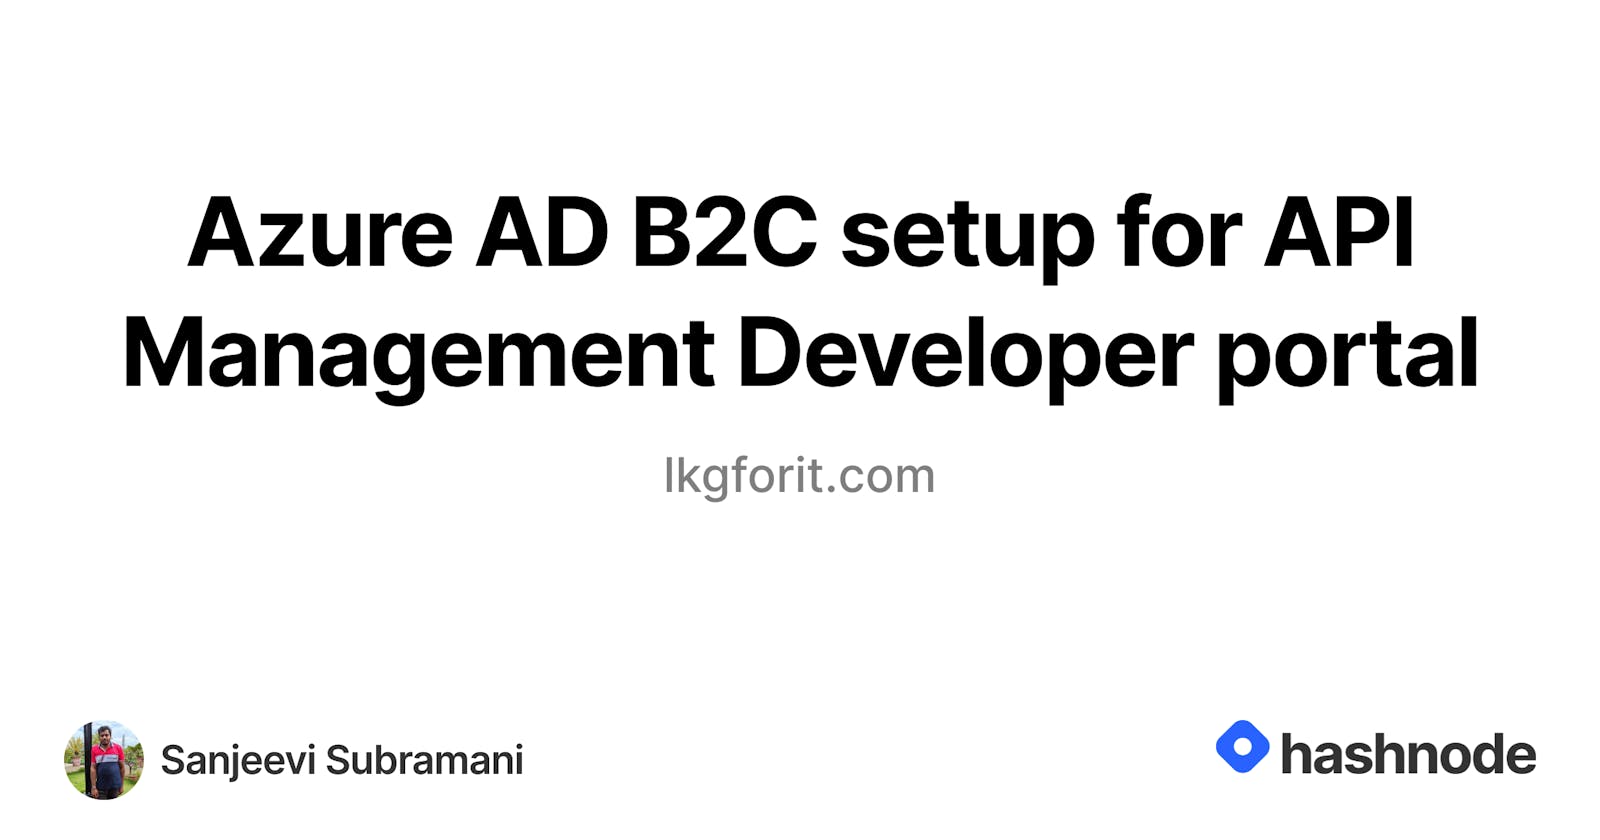 Azure AD B2C setup for API Management Developer portal